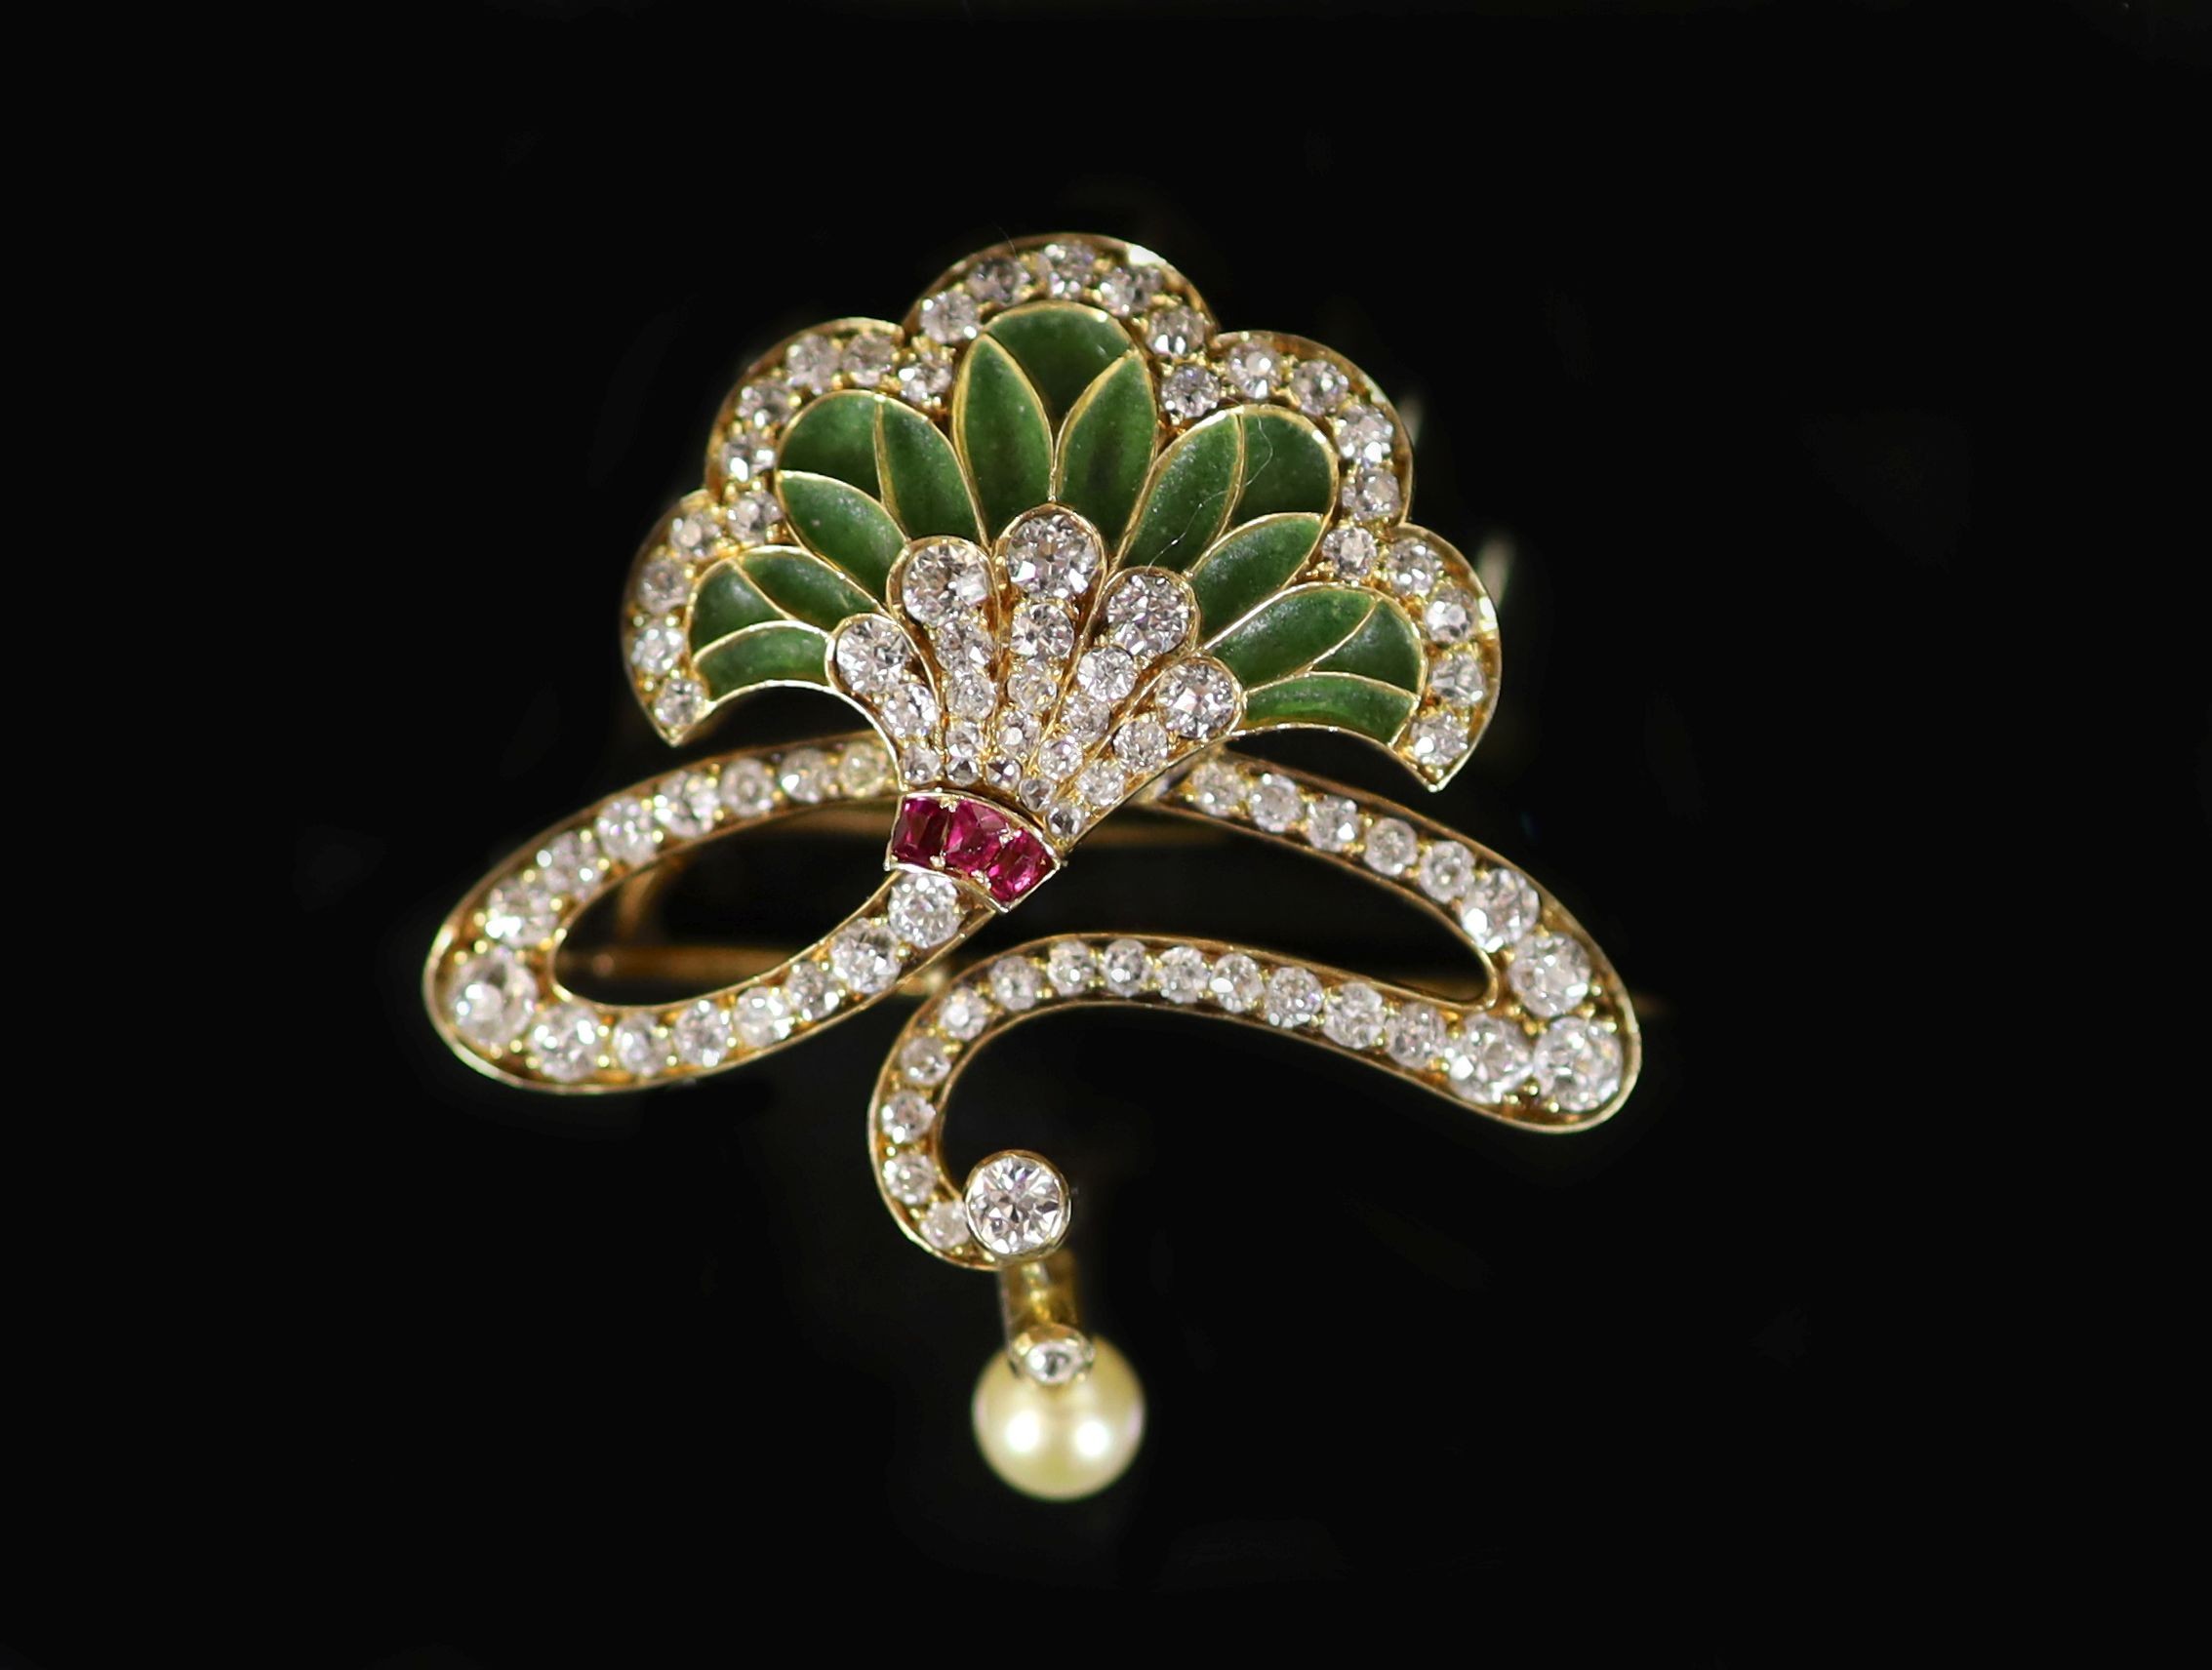 A Continental gold, ruby, diamond, plique a jour enamel and drop pearl set clip brooch